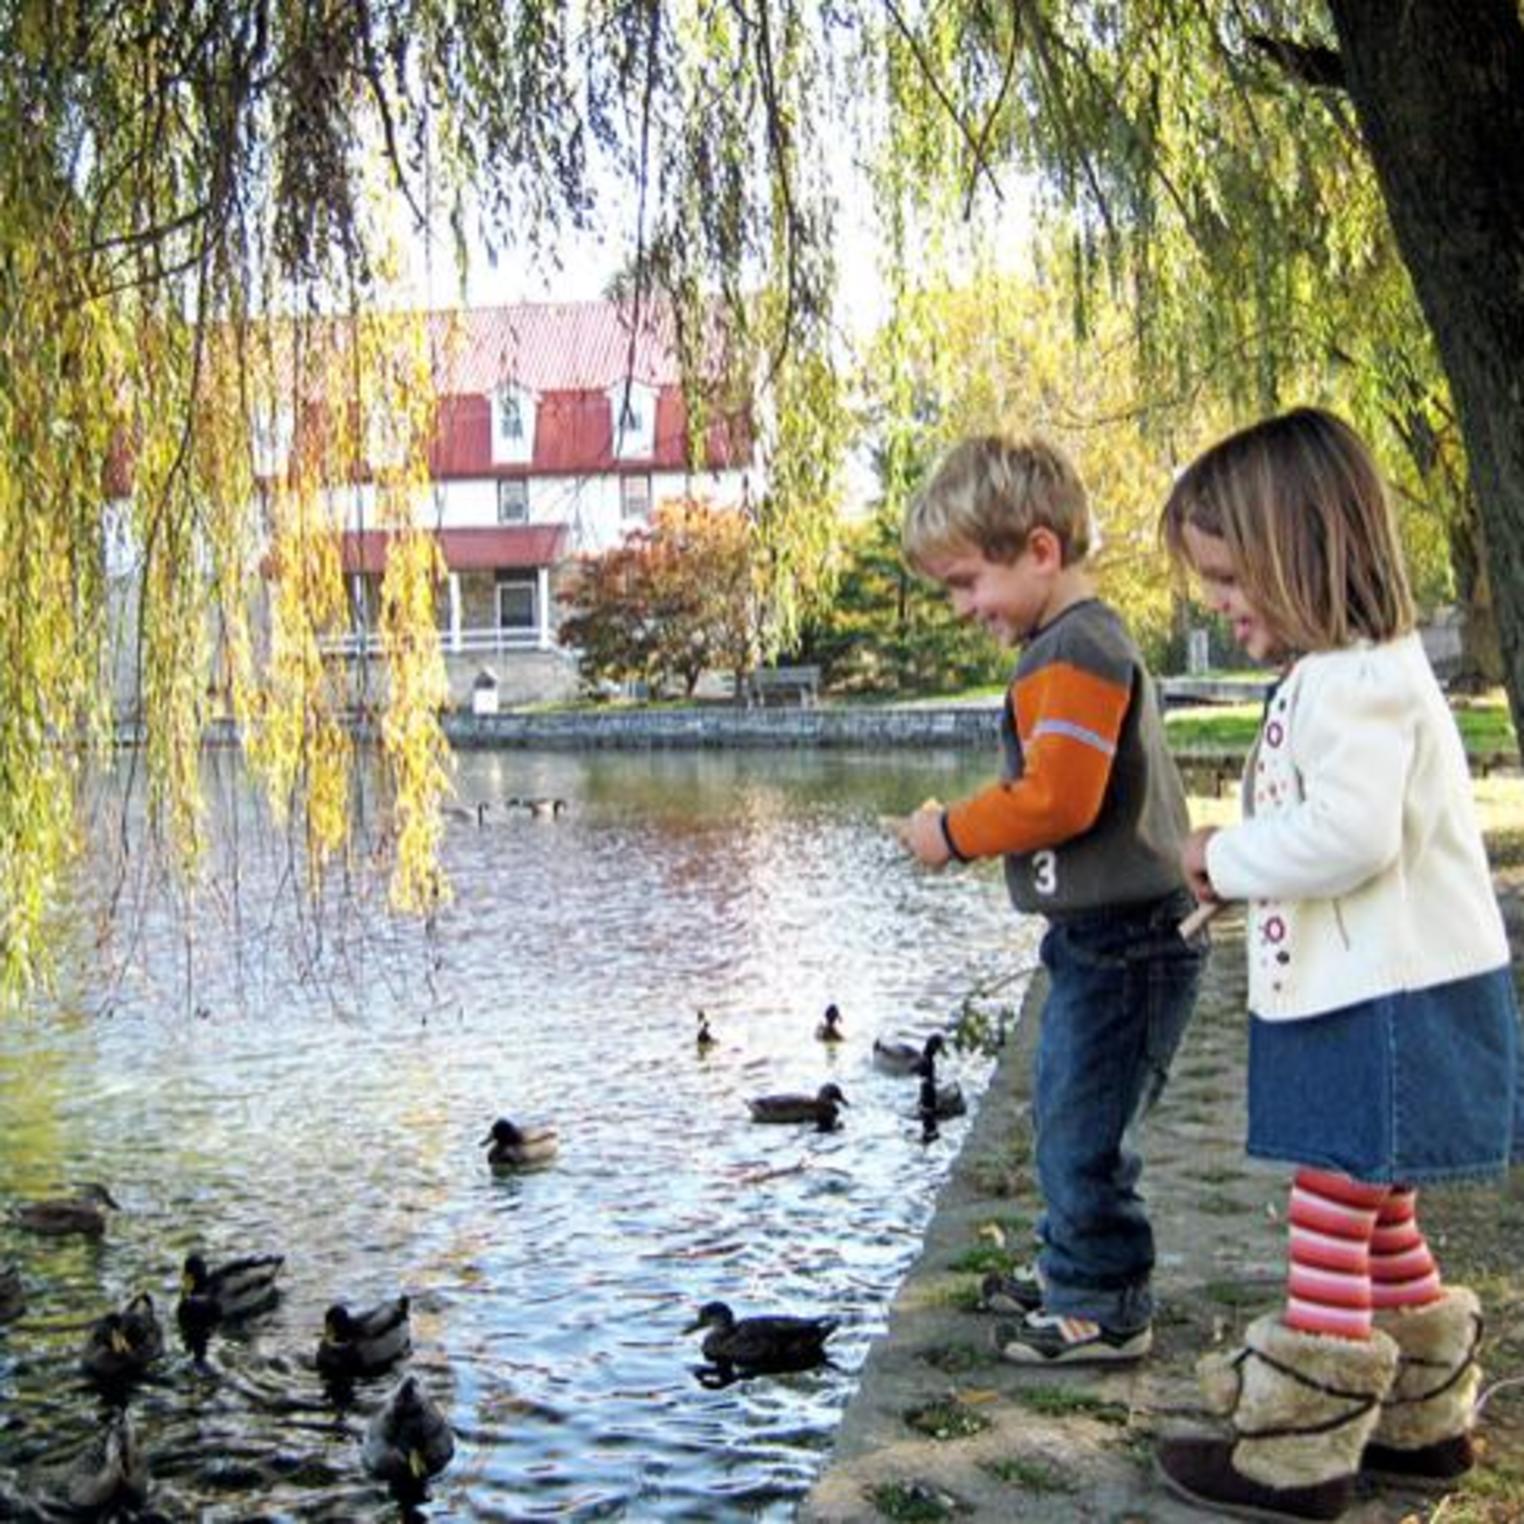 Feeding the ducks at Children's Lake